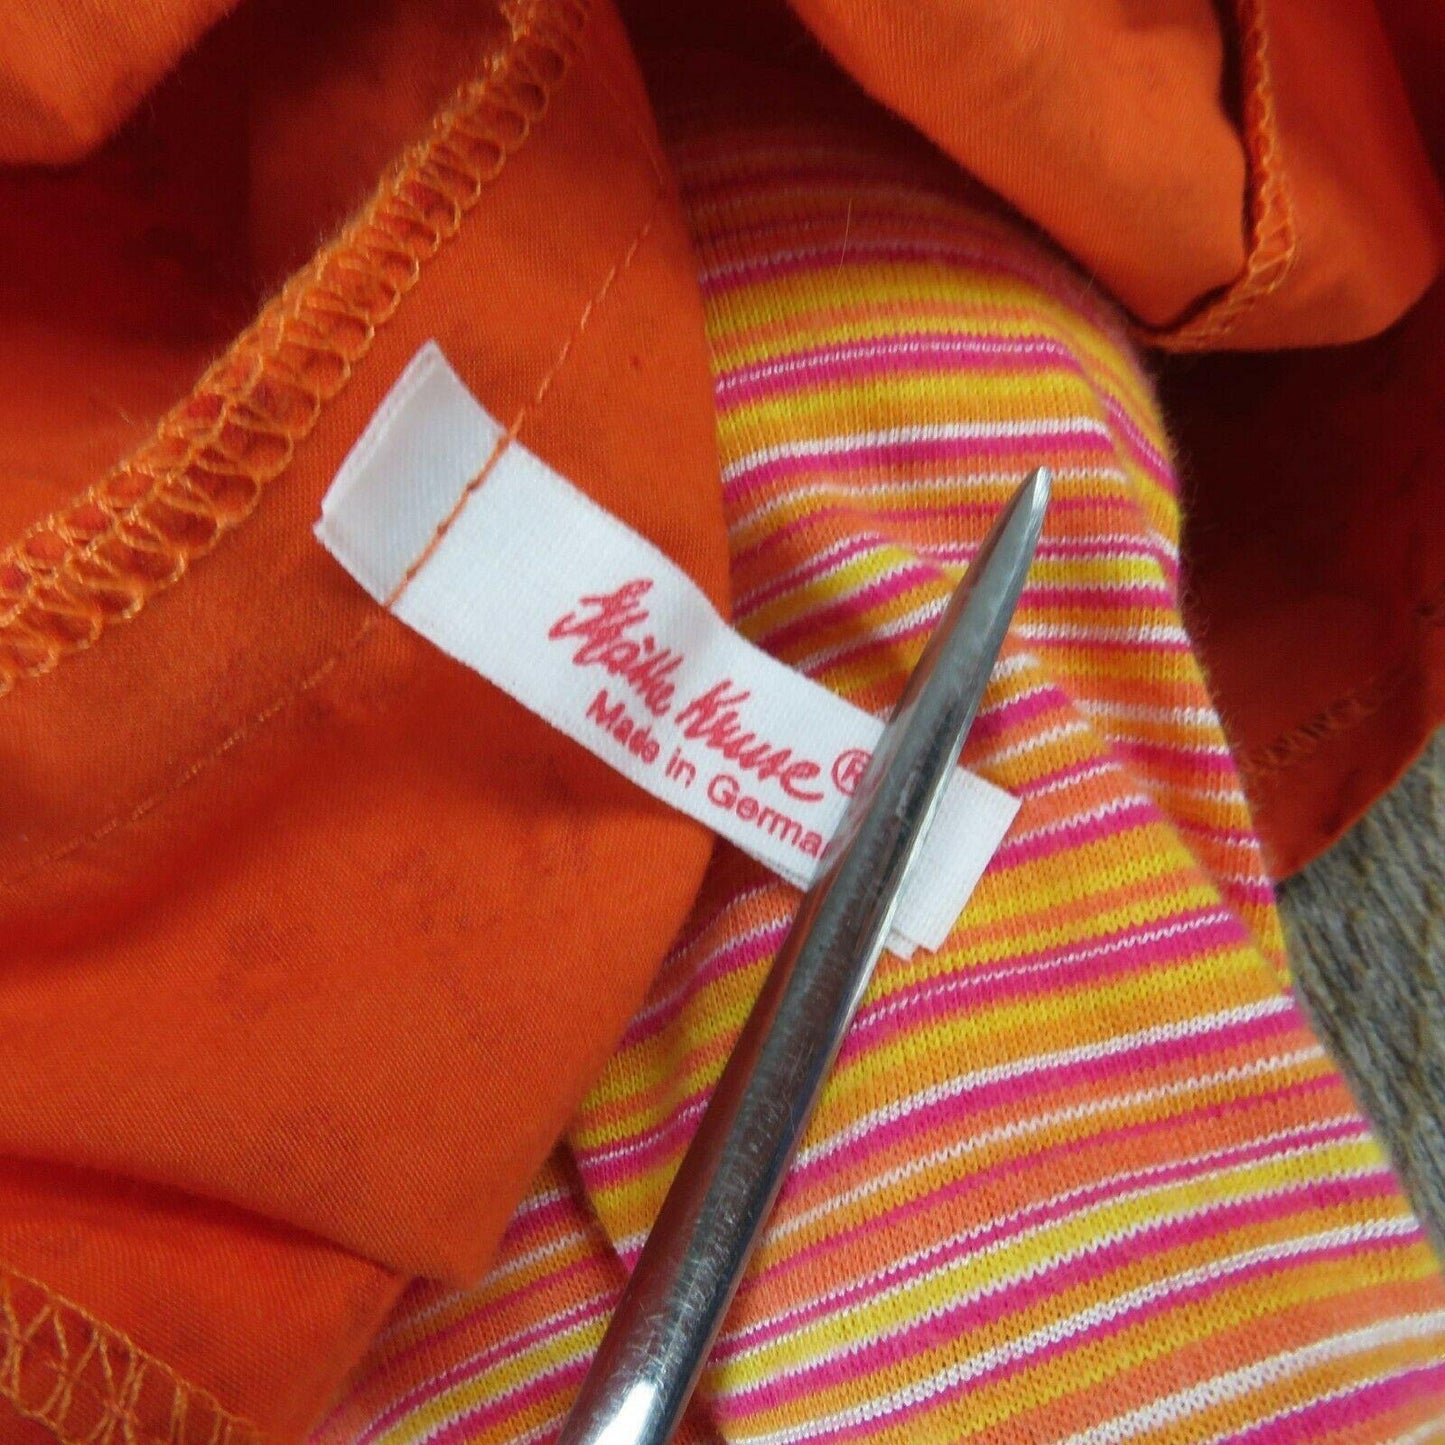 Kathe Kruse Baby Doll Soft Body Rag Plush Heirloom Brunette Braids Orange Dress